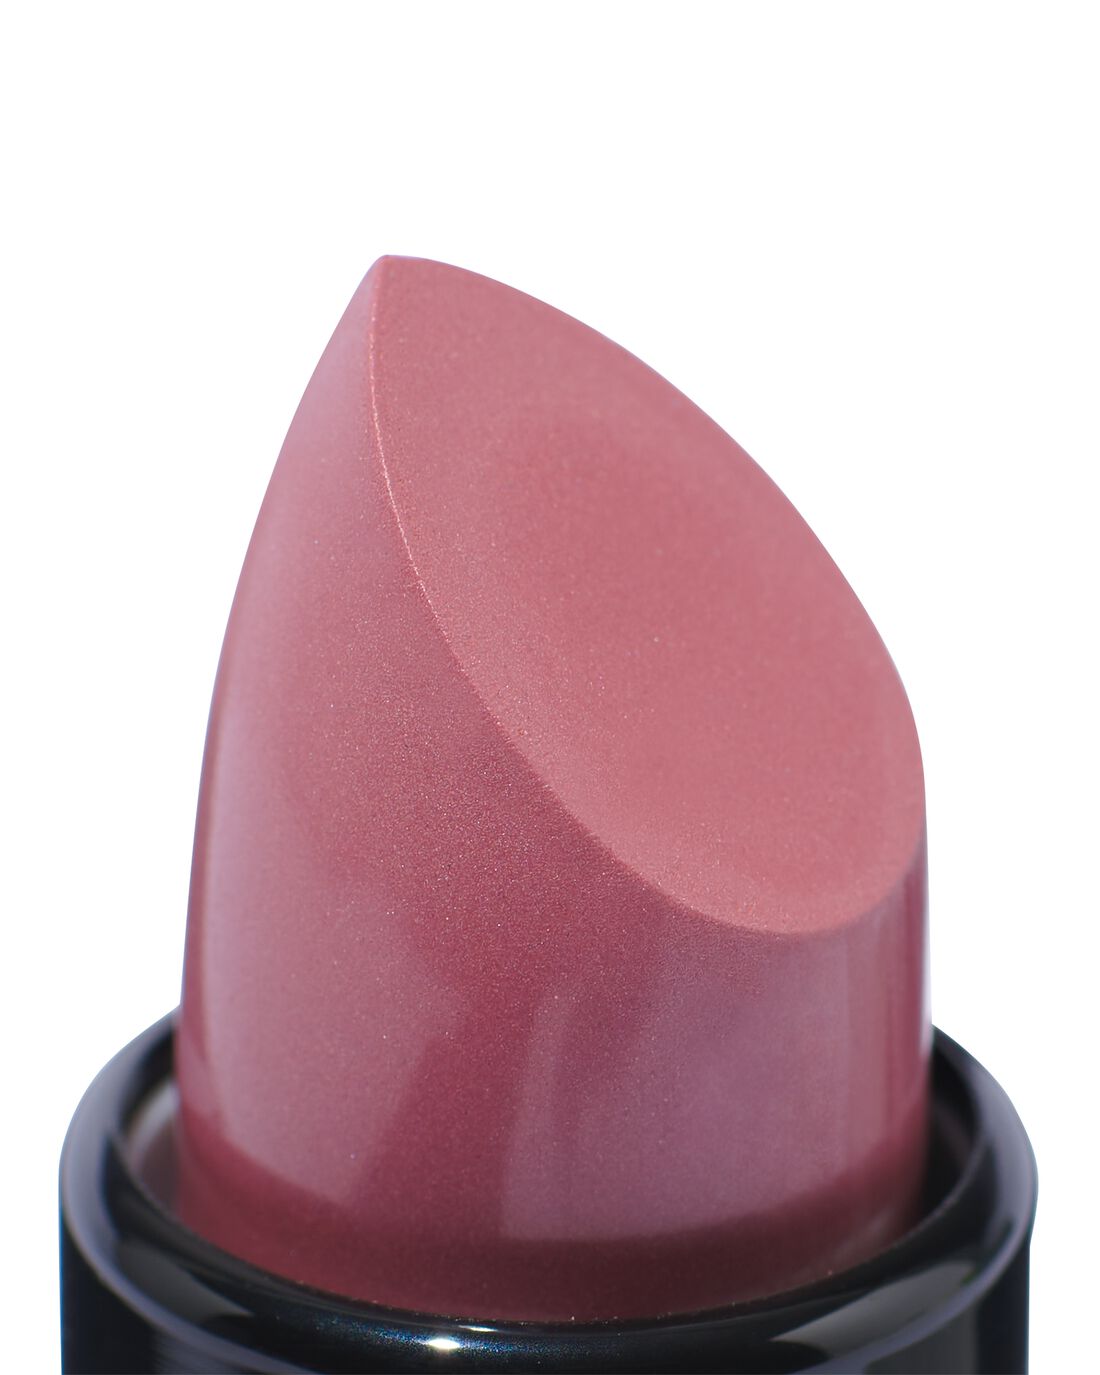 HEMA Lipstick Moisturizing 910 Blushed Rose (donkerroze)